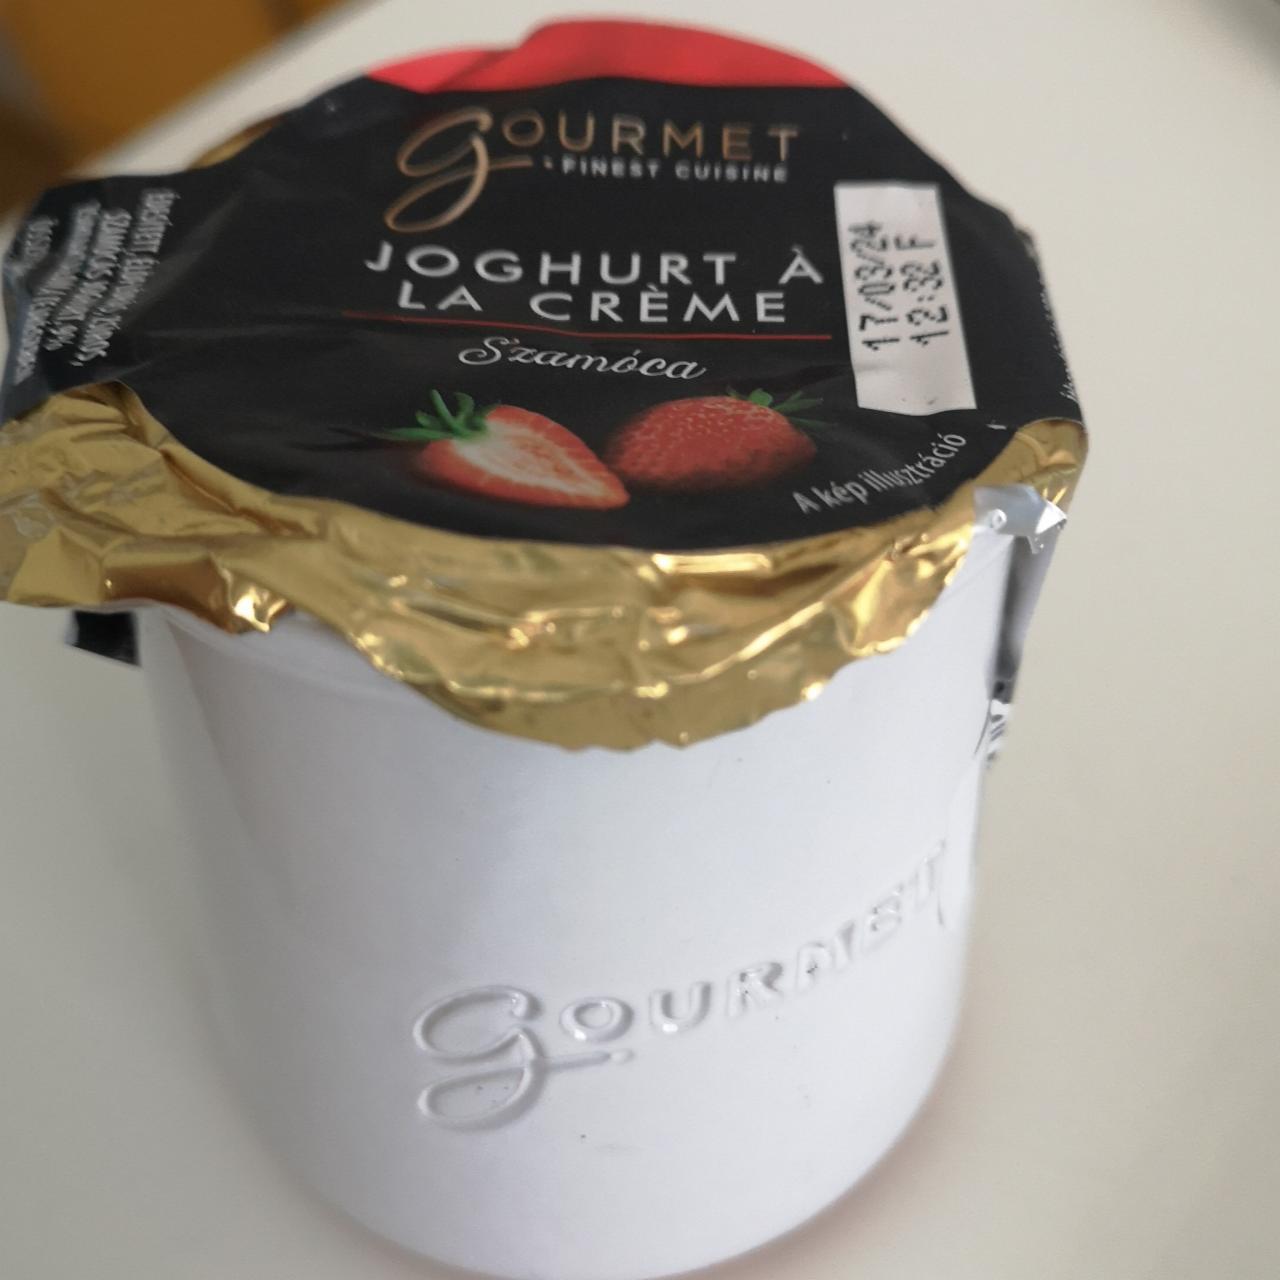 Képek - Joghurt á la créme Gourmet finest cuisine